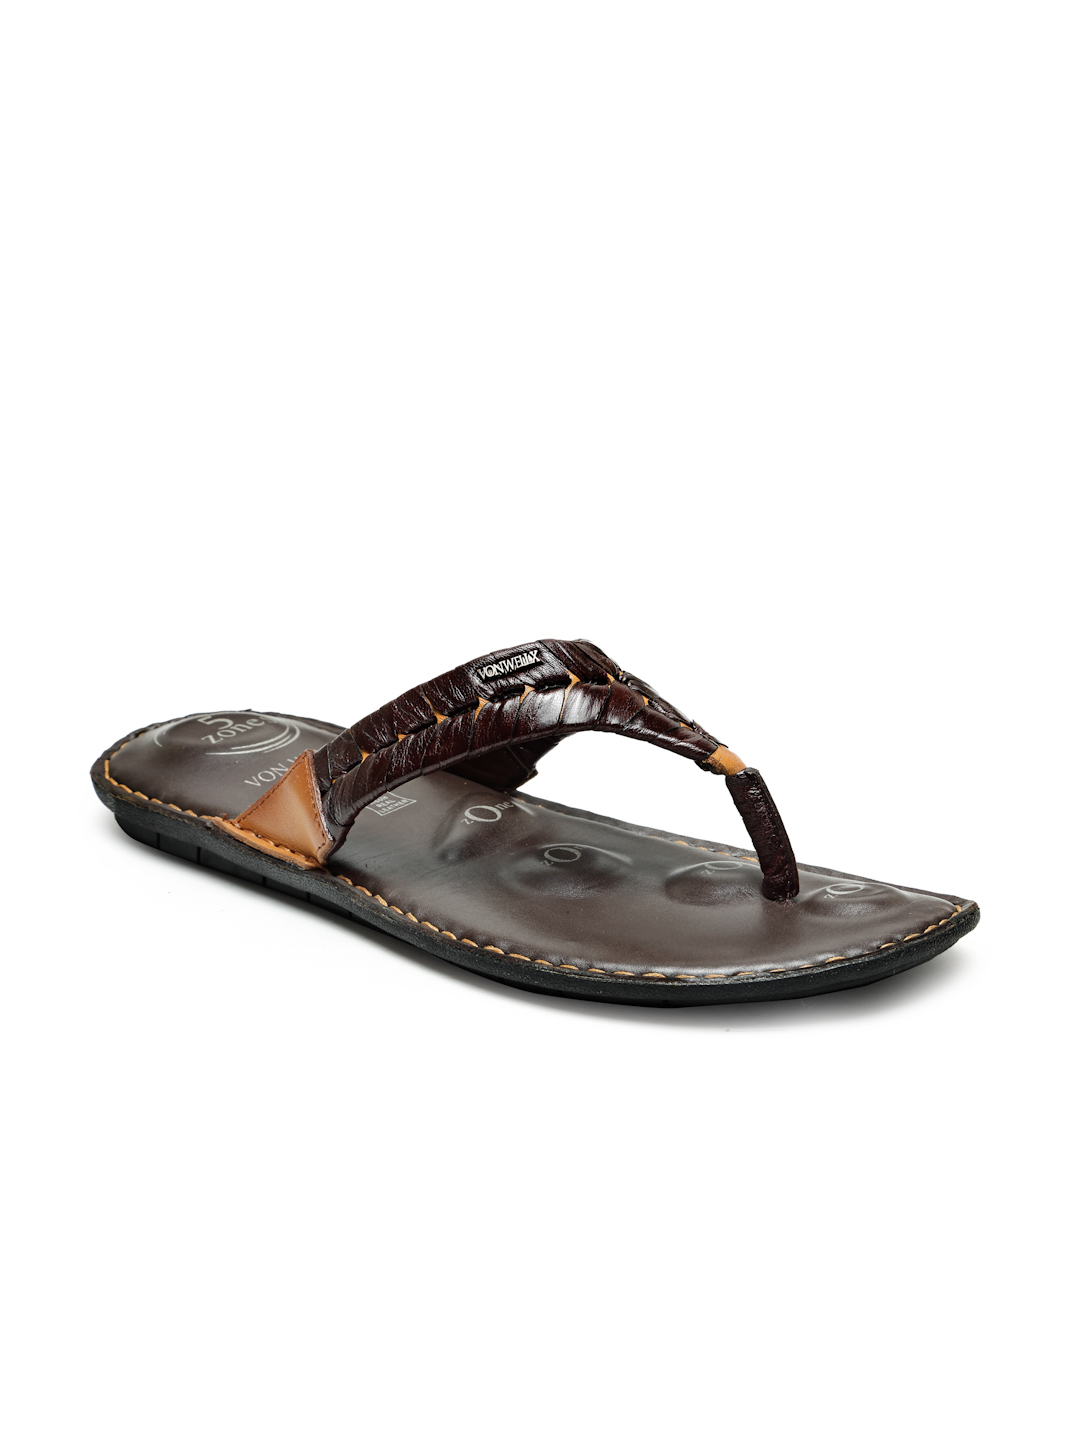 Buy Von Wellx Germany Comfort Men's Tan Slippers Alonso Online in Salalah